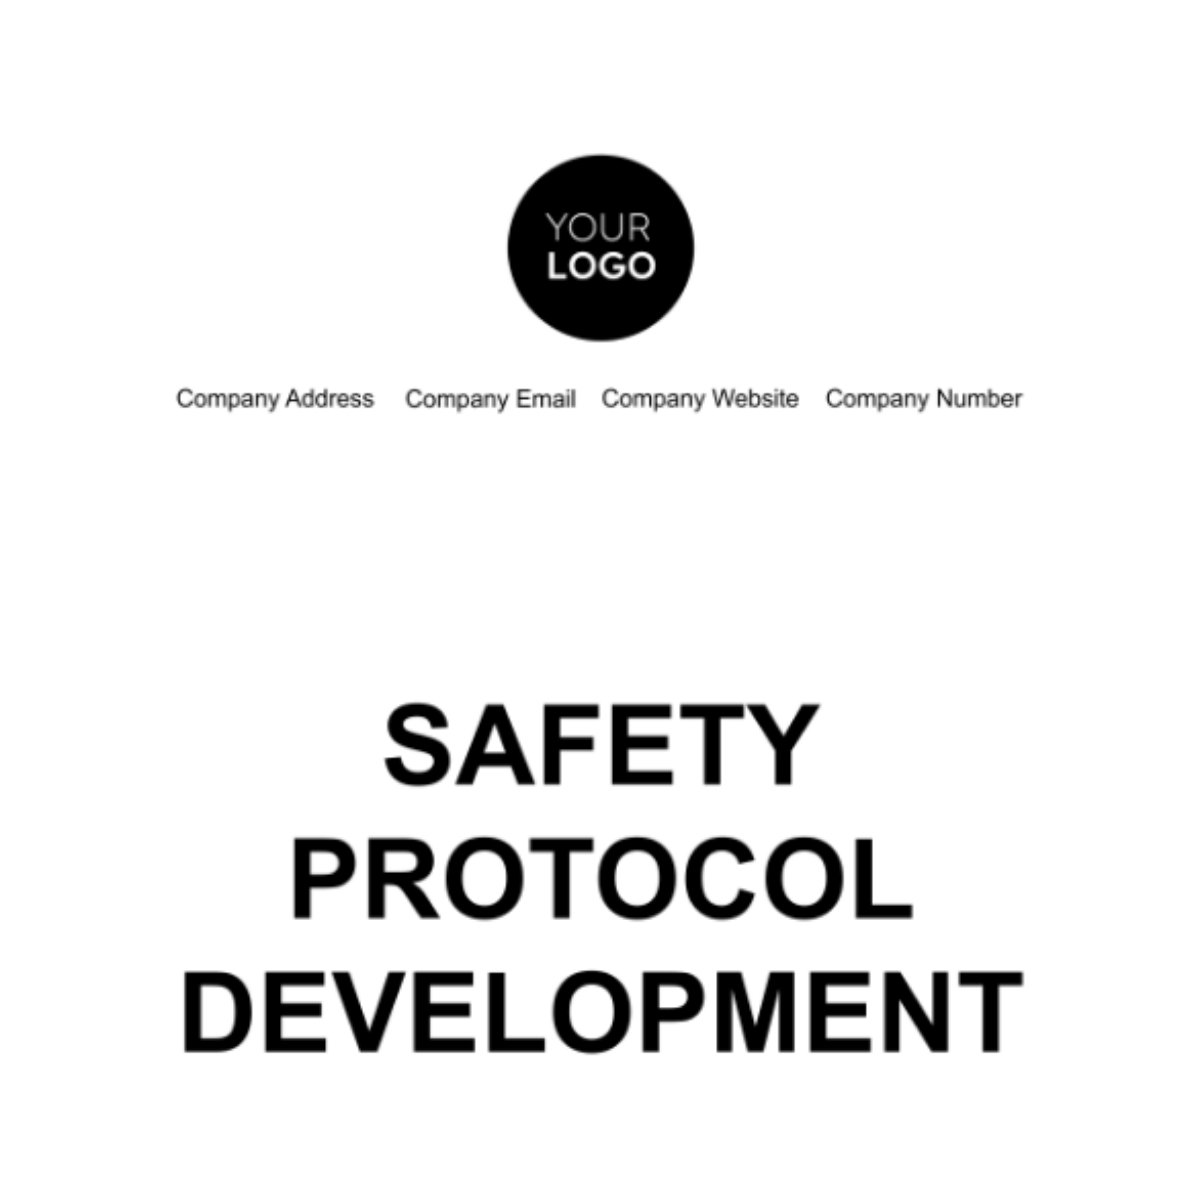 Safety Protocol Development Template